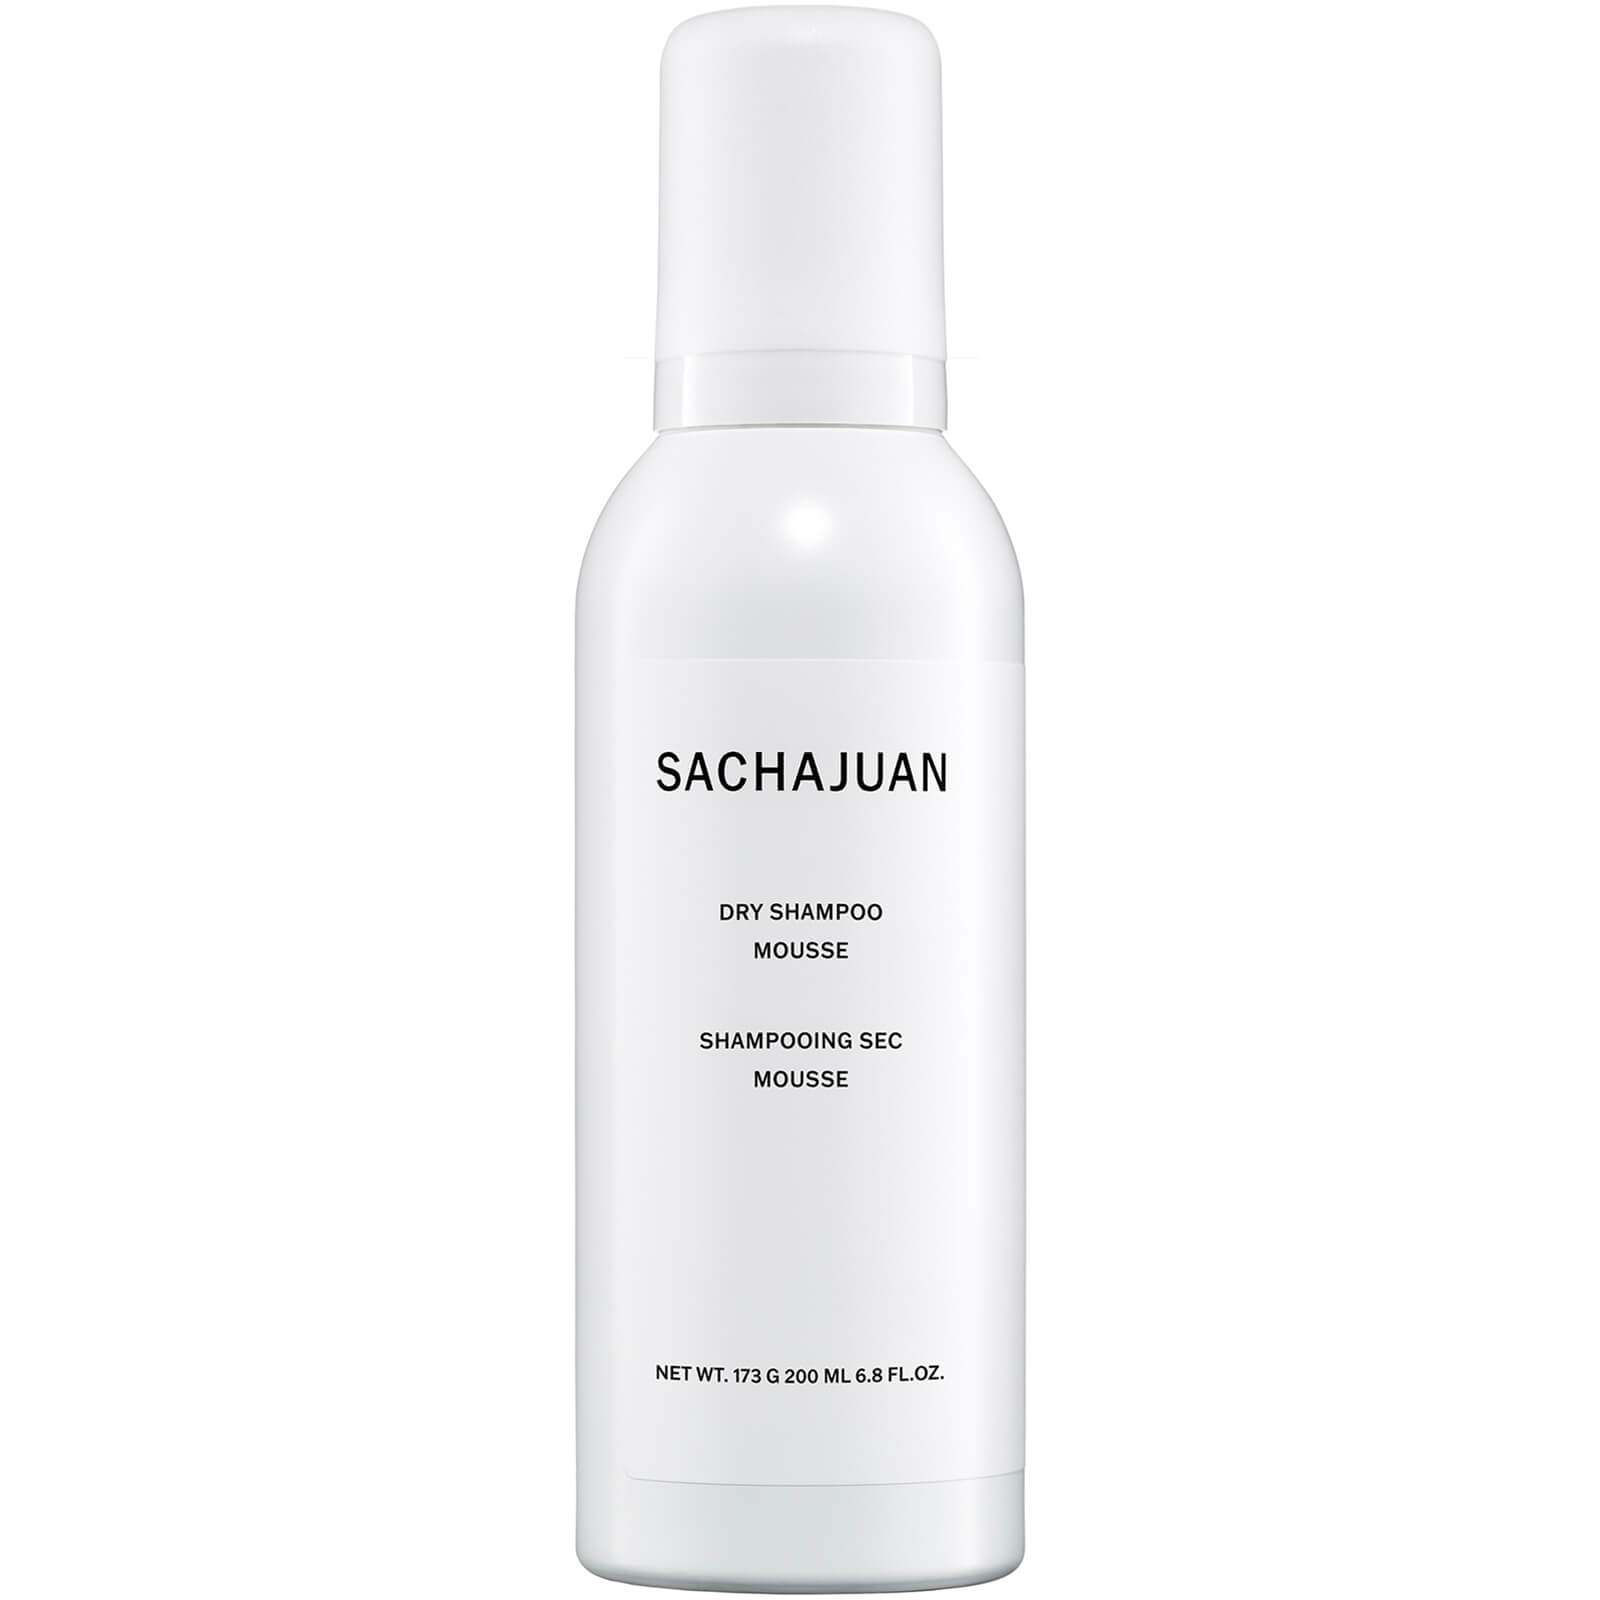 Image of Sachajuan Dry Shampoo Mousse 200ml